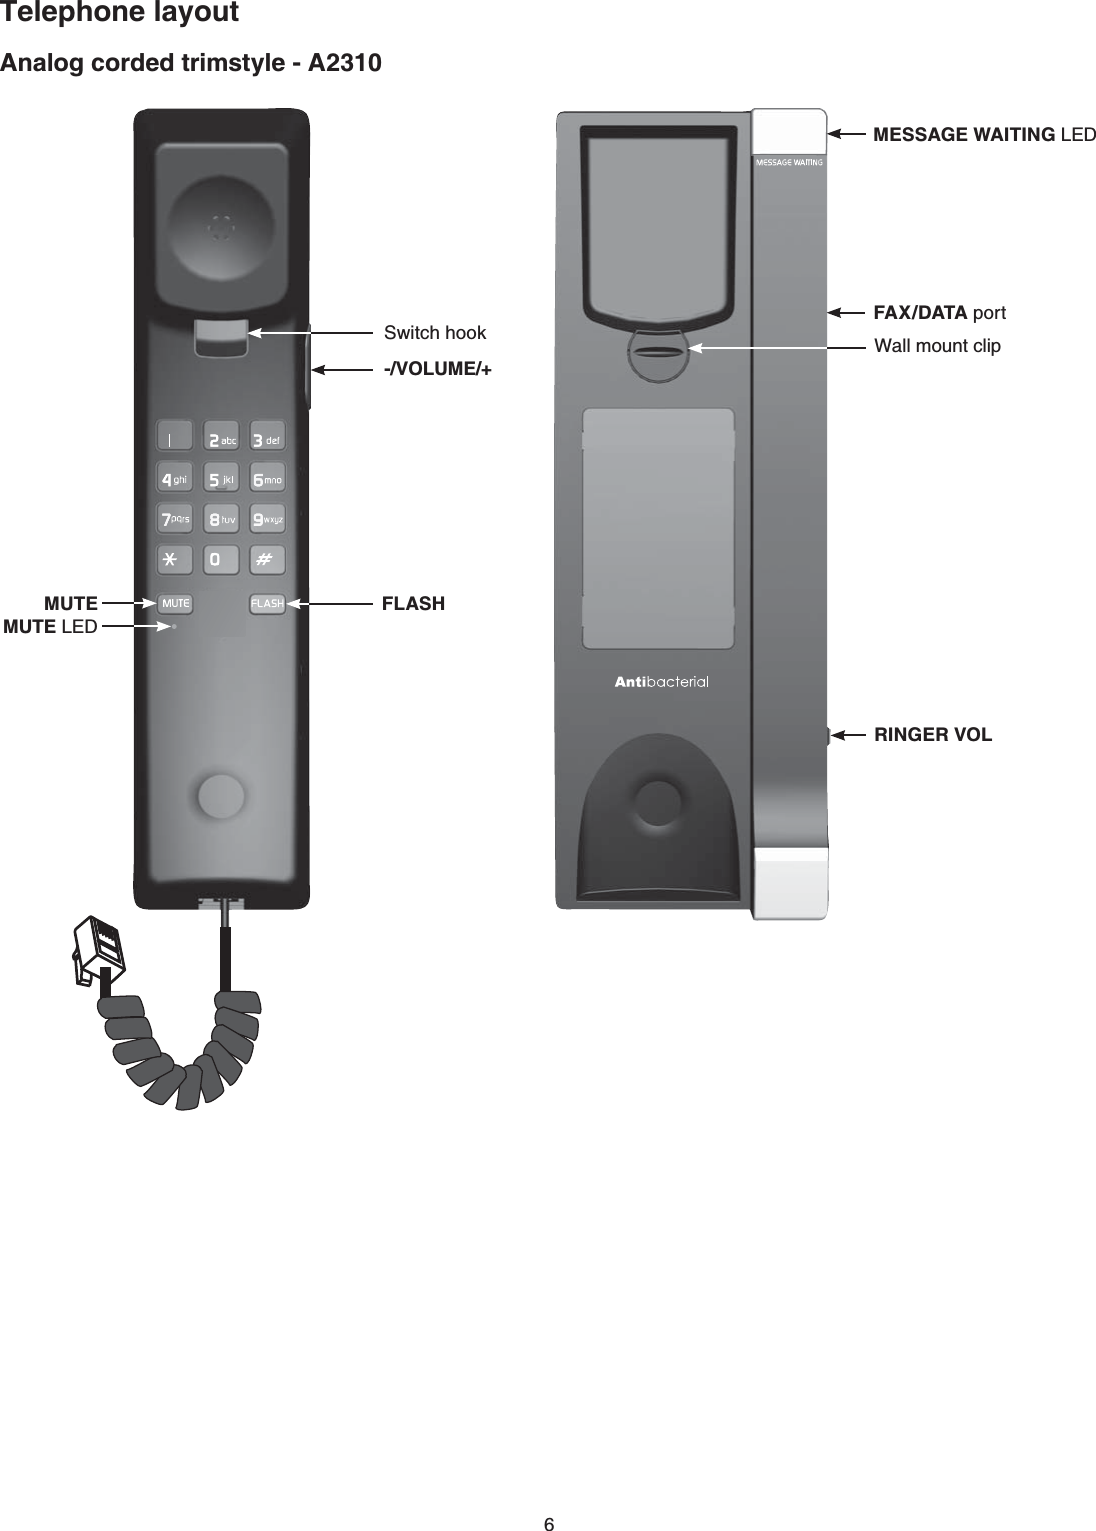 Telephone layout6Analog corded trimstyle - A2310Wall mount clipSwitch hookFLASH-/VOLUME/+MUTERINGER VOLFAX/DATA portMESSAGE WAITING LEDMUTE LED